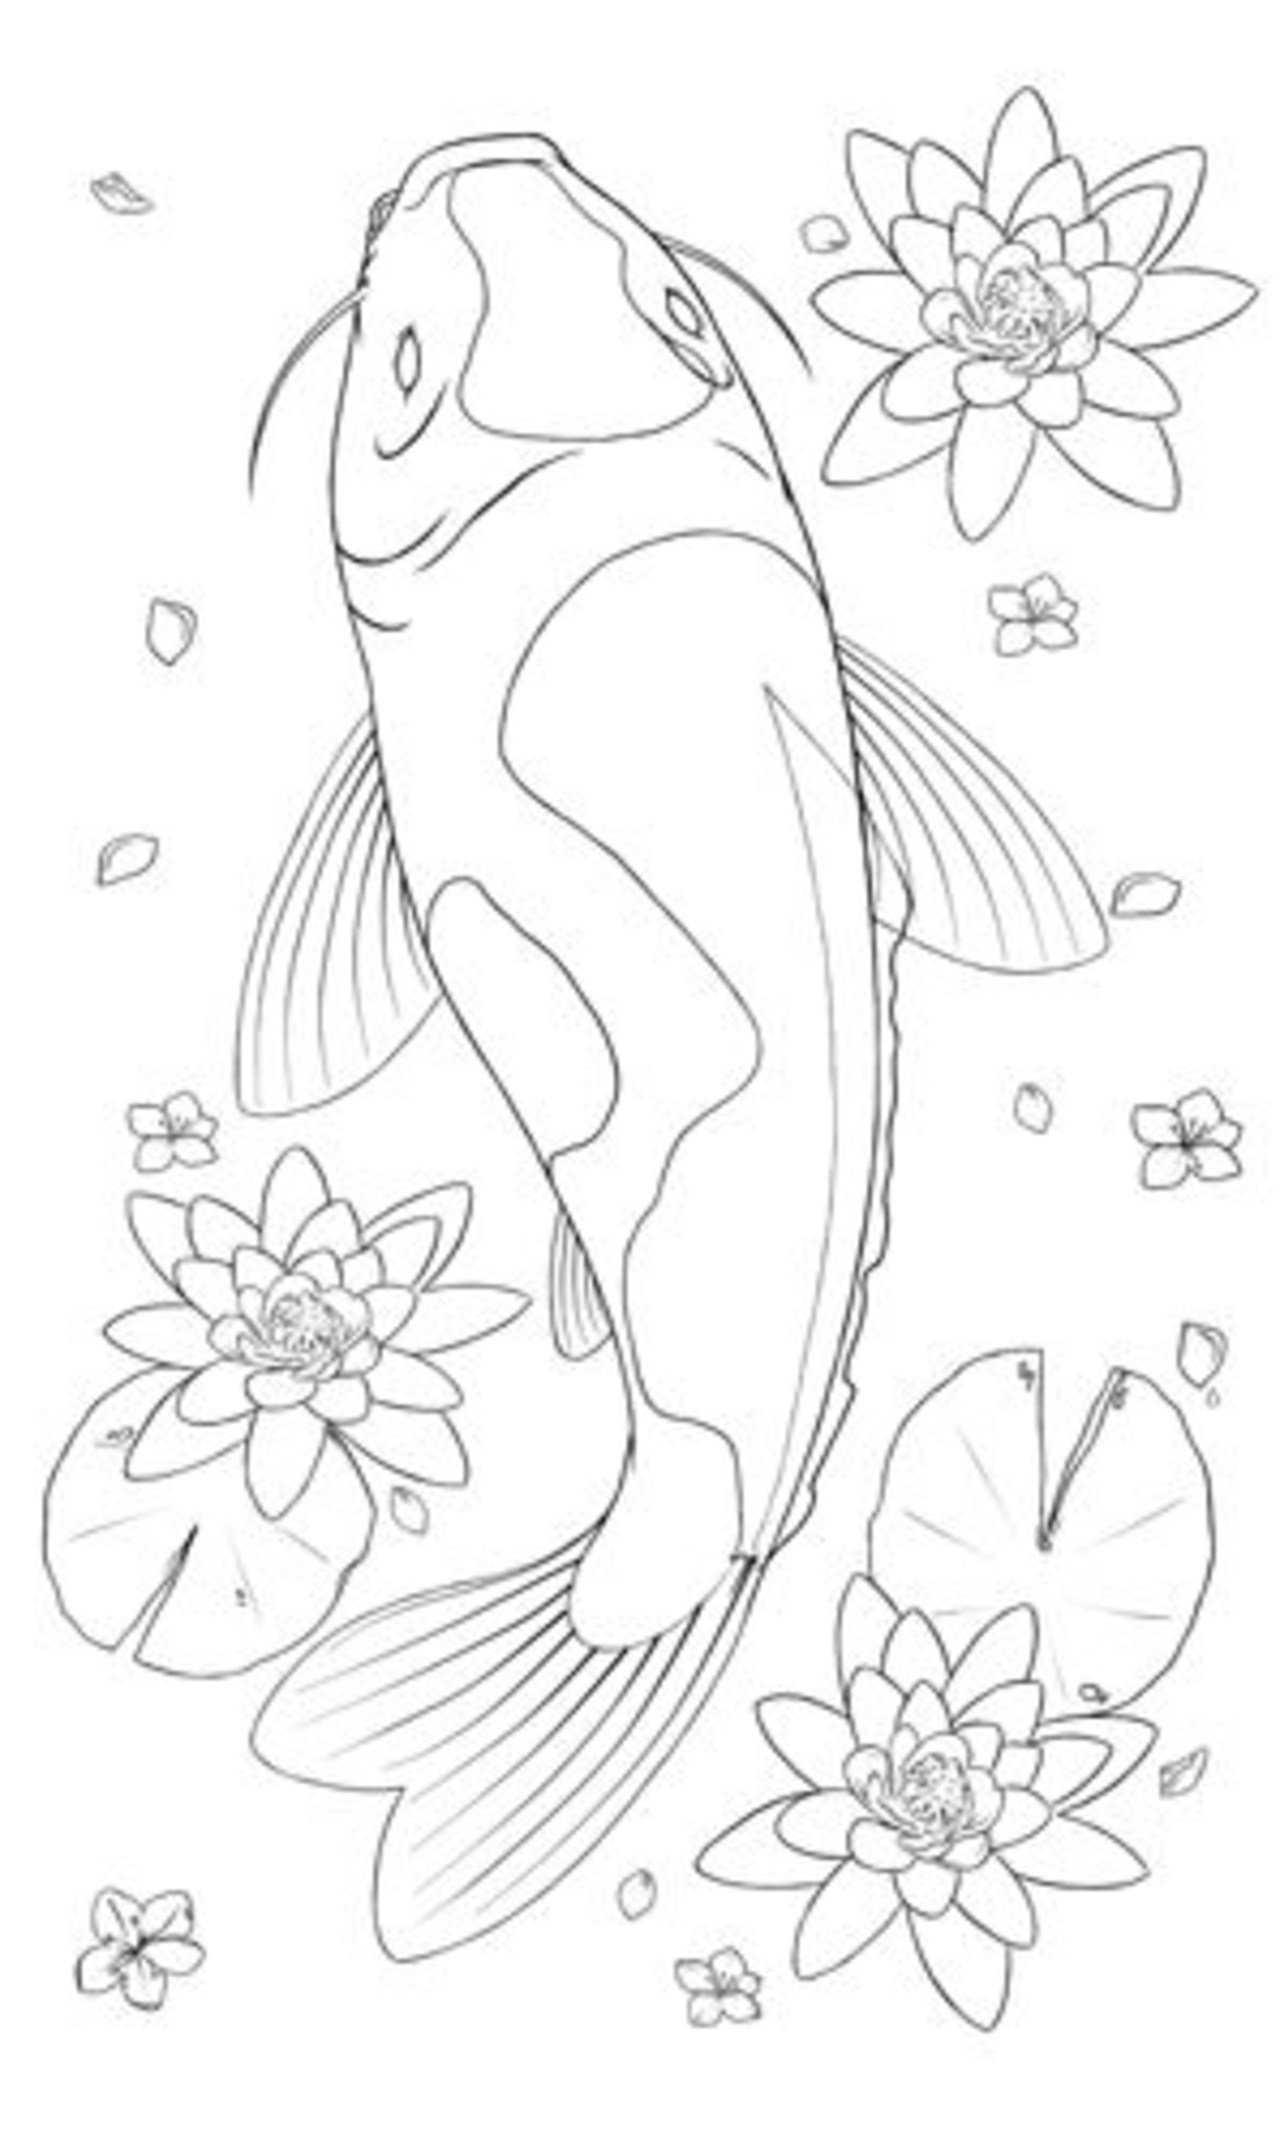 Koi Fish Line Drawing at PaintingValley.com | Explore ...